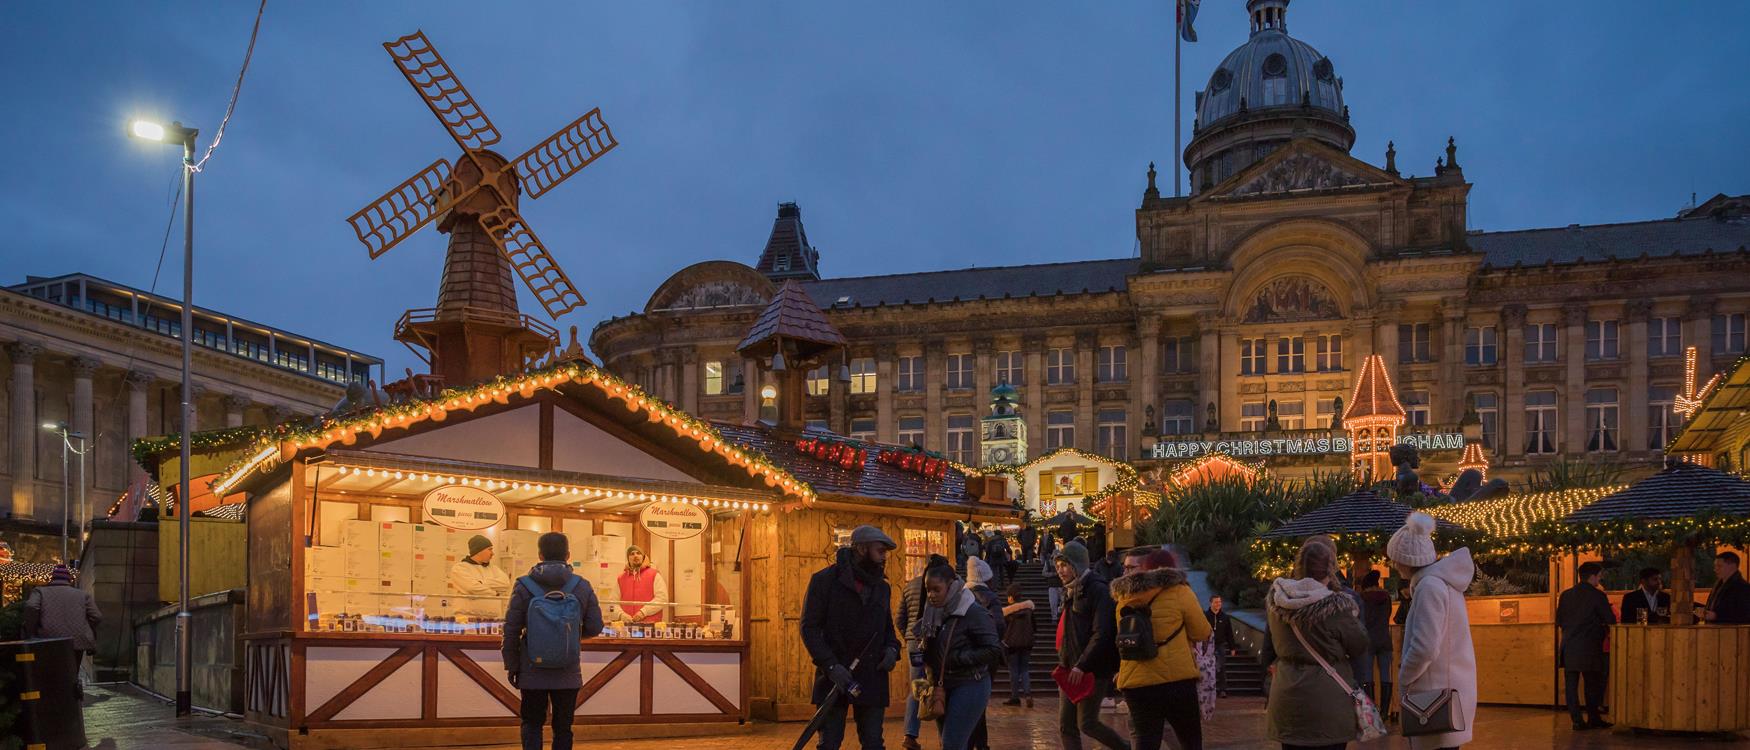 Birmingham Frankfurt Christmas Market is back each November!